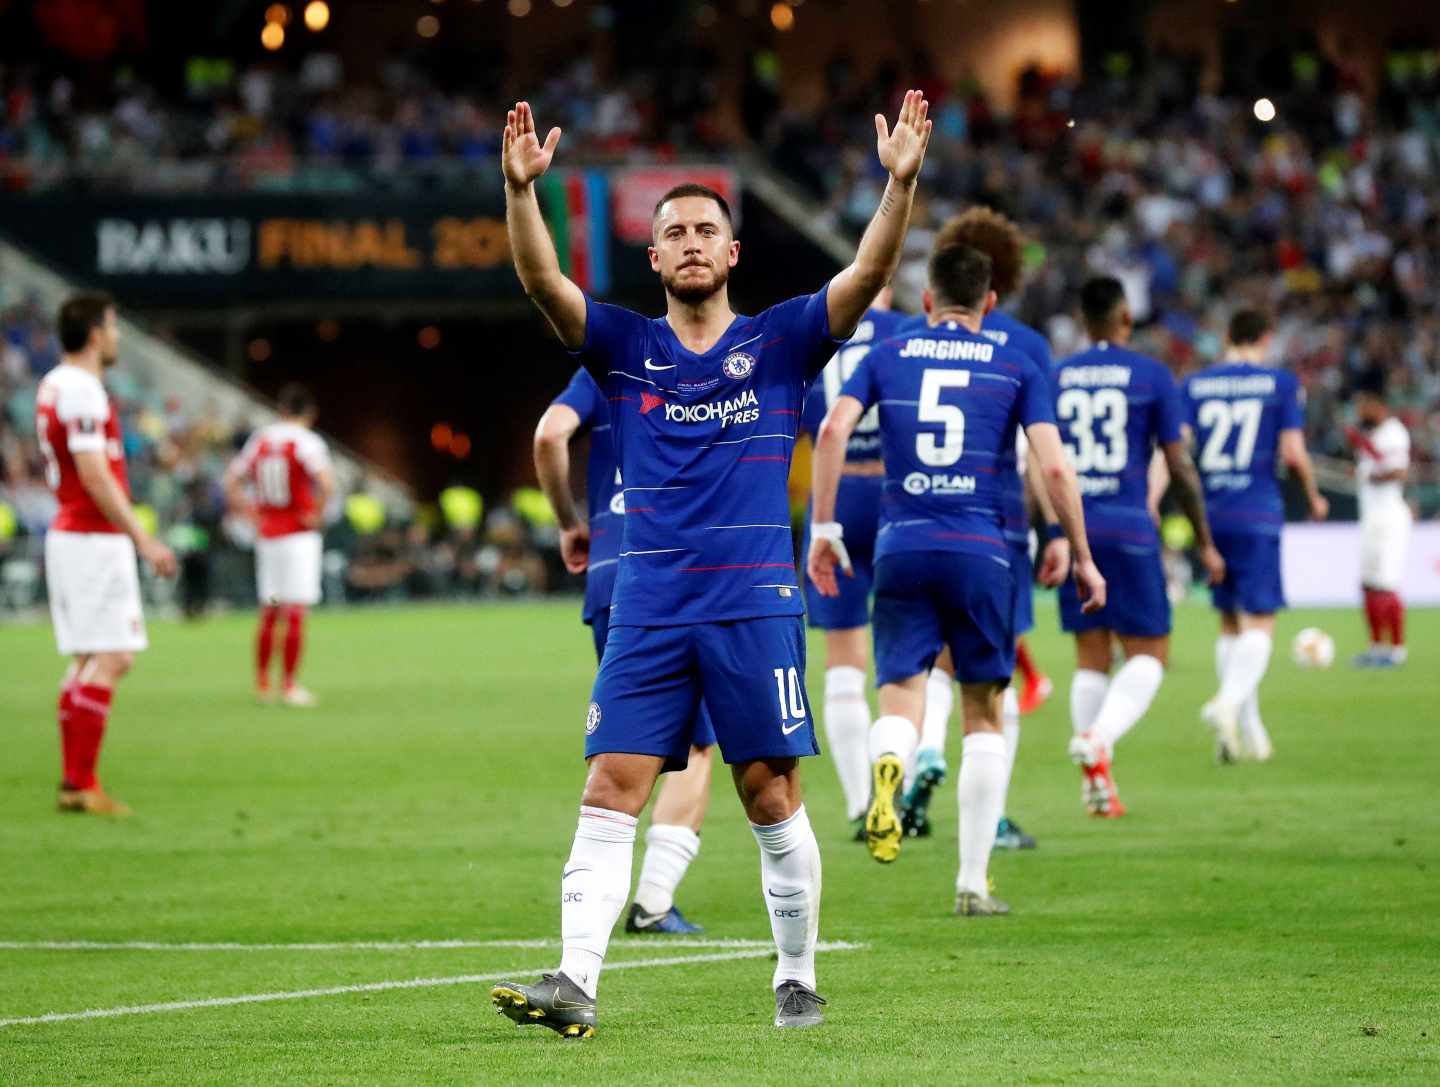 Hazard celebra un gol del Chelsea.